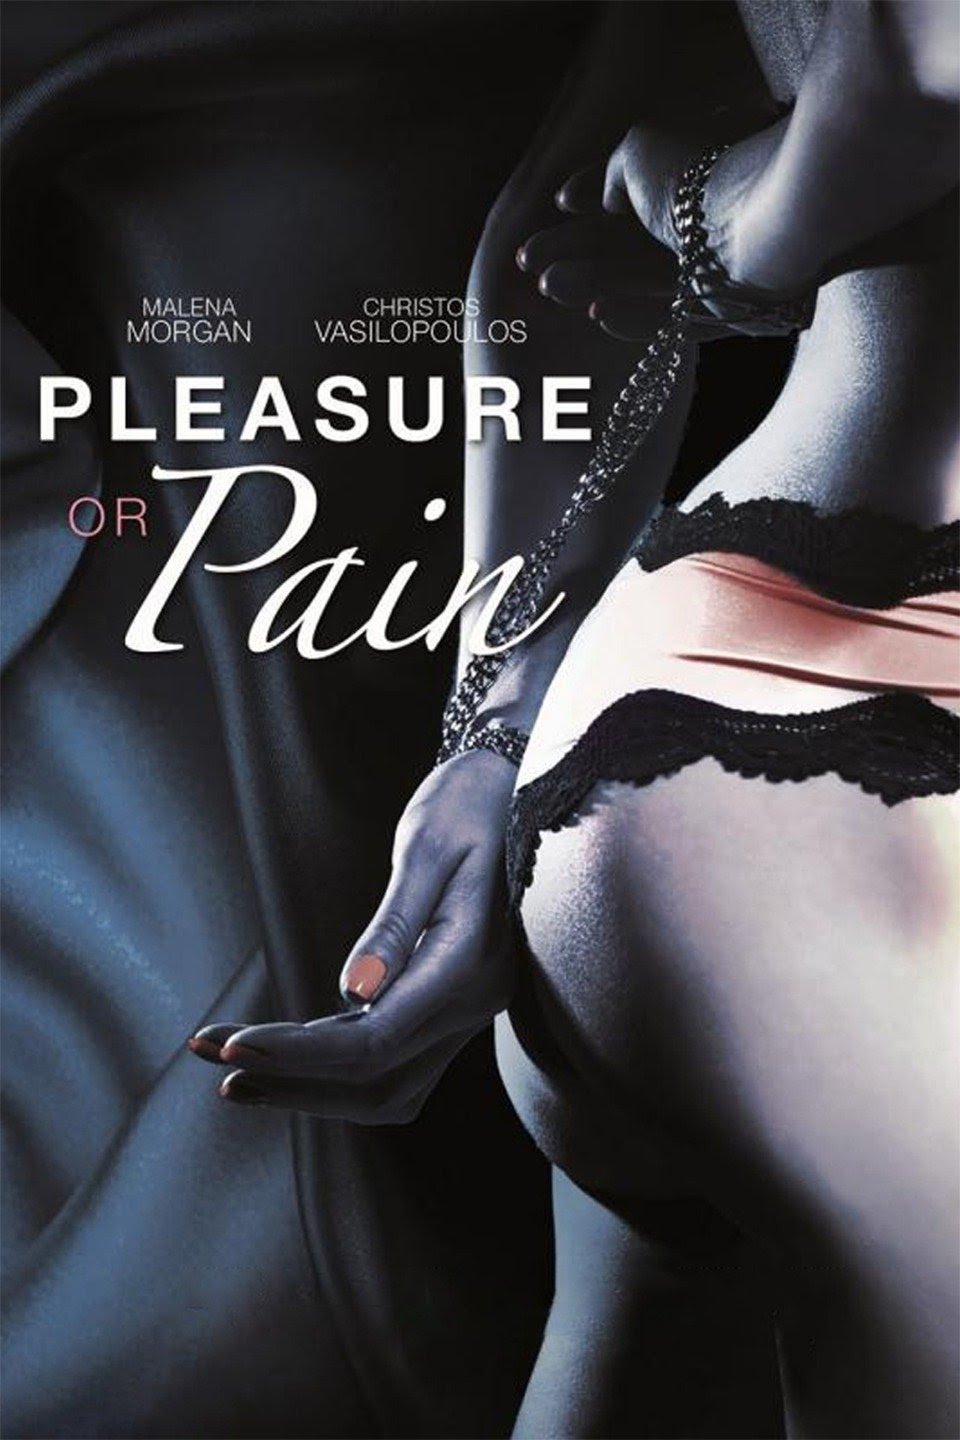 Download [18+] Pleasure or Pain (2013) Dual Audio Hindi Dubbed Movie 480p | 720p | 1080p WEB-DL